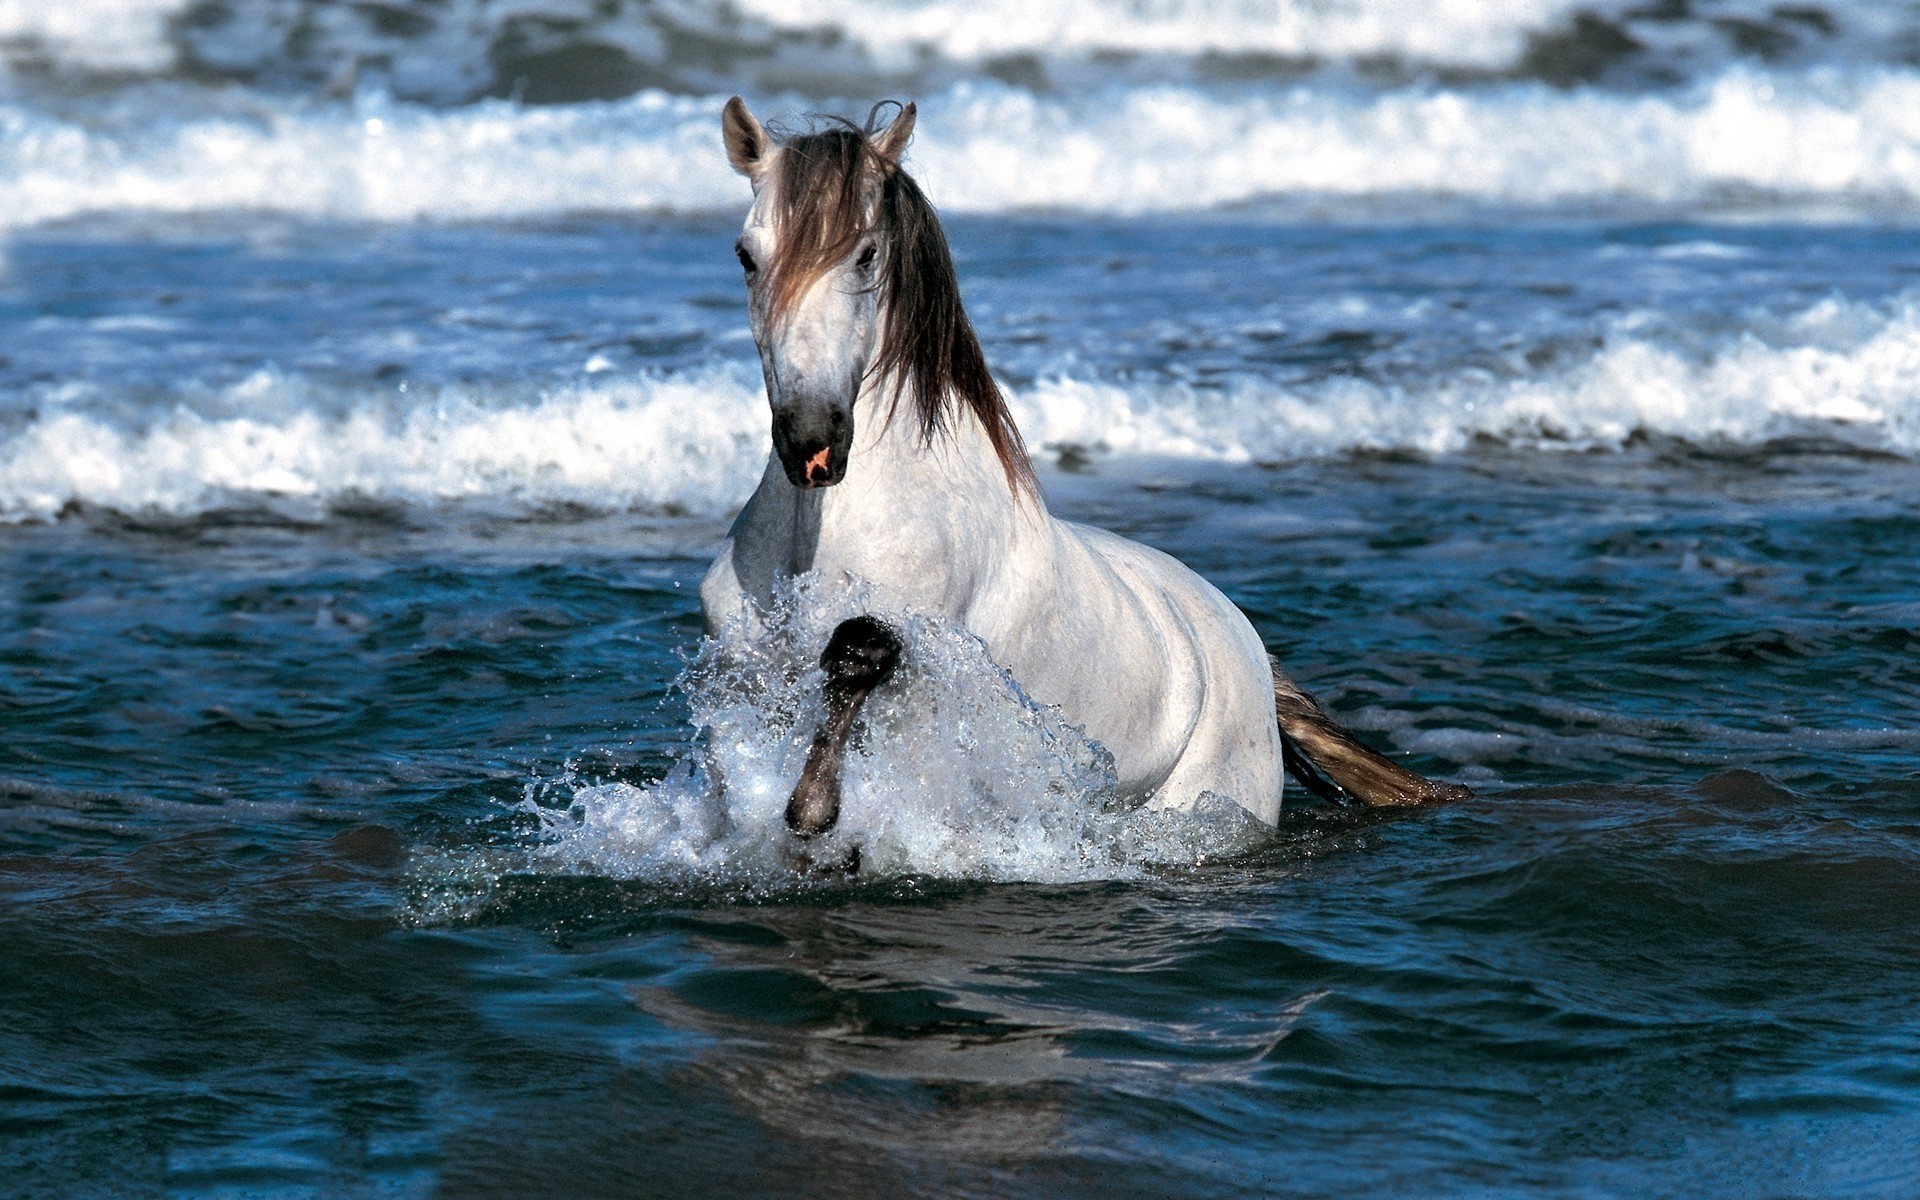 animals water sea ocean wave splash nature mare summer horse